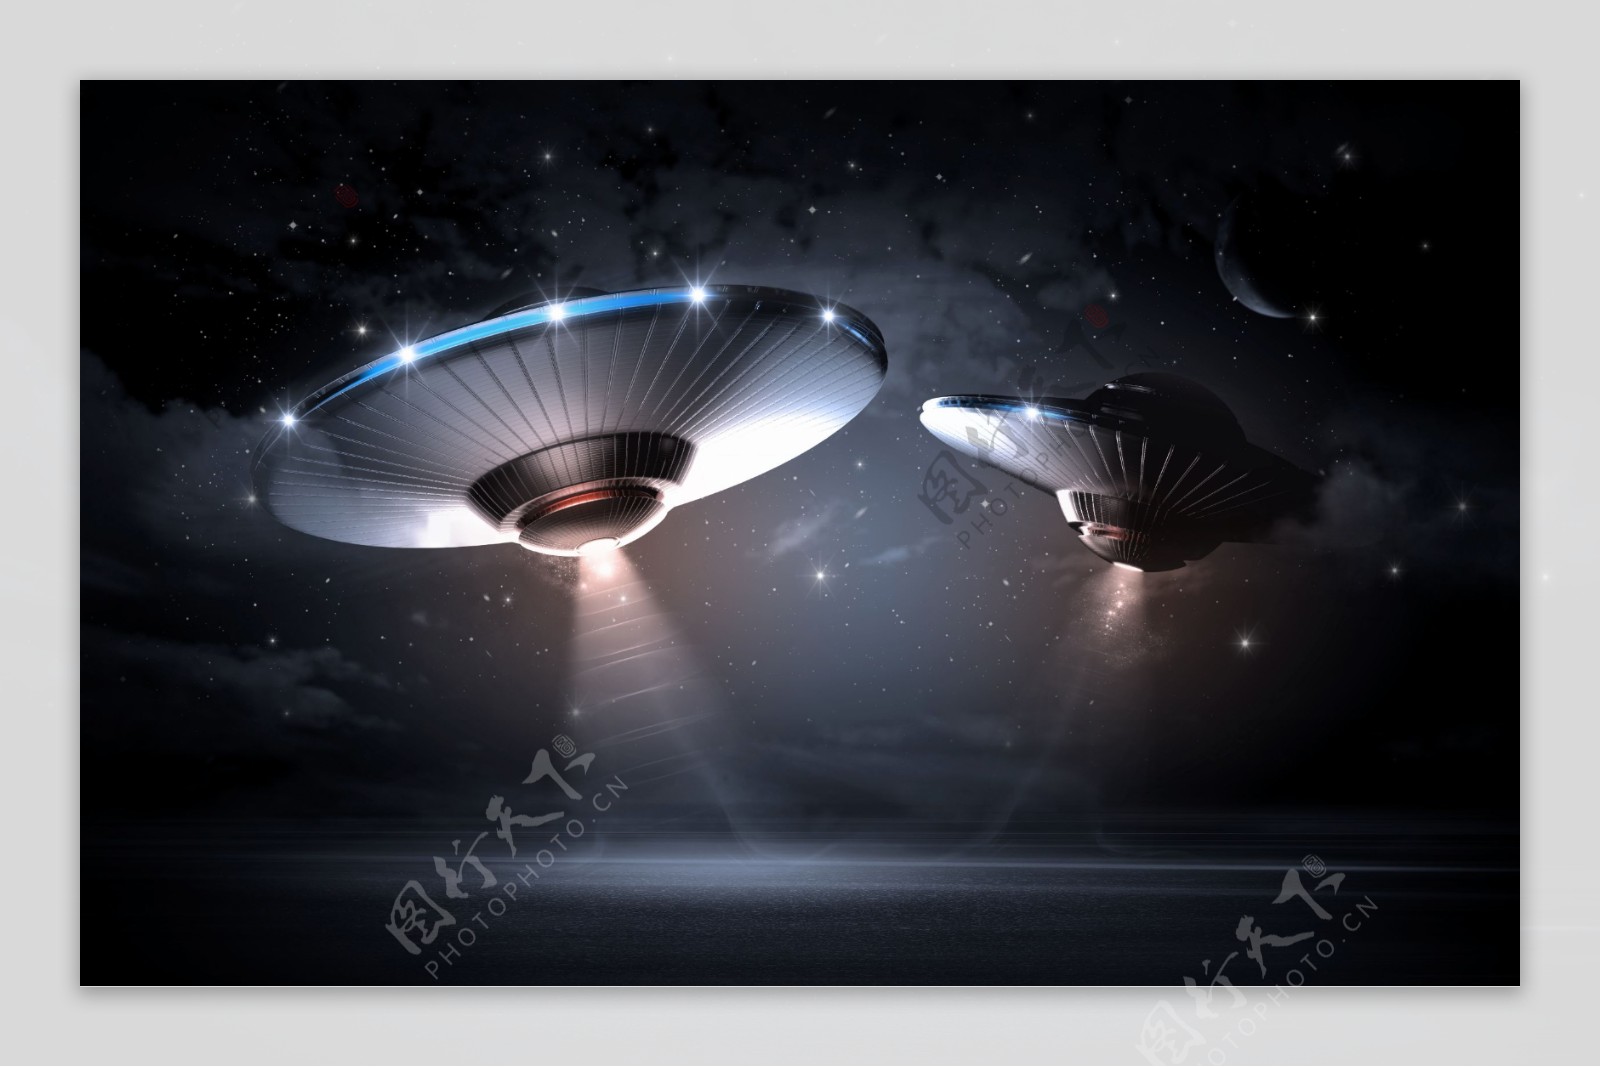 UFO飞碟设计图__其他_现代科技_设计图库_昵图网nipic.com